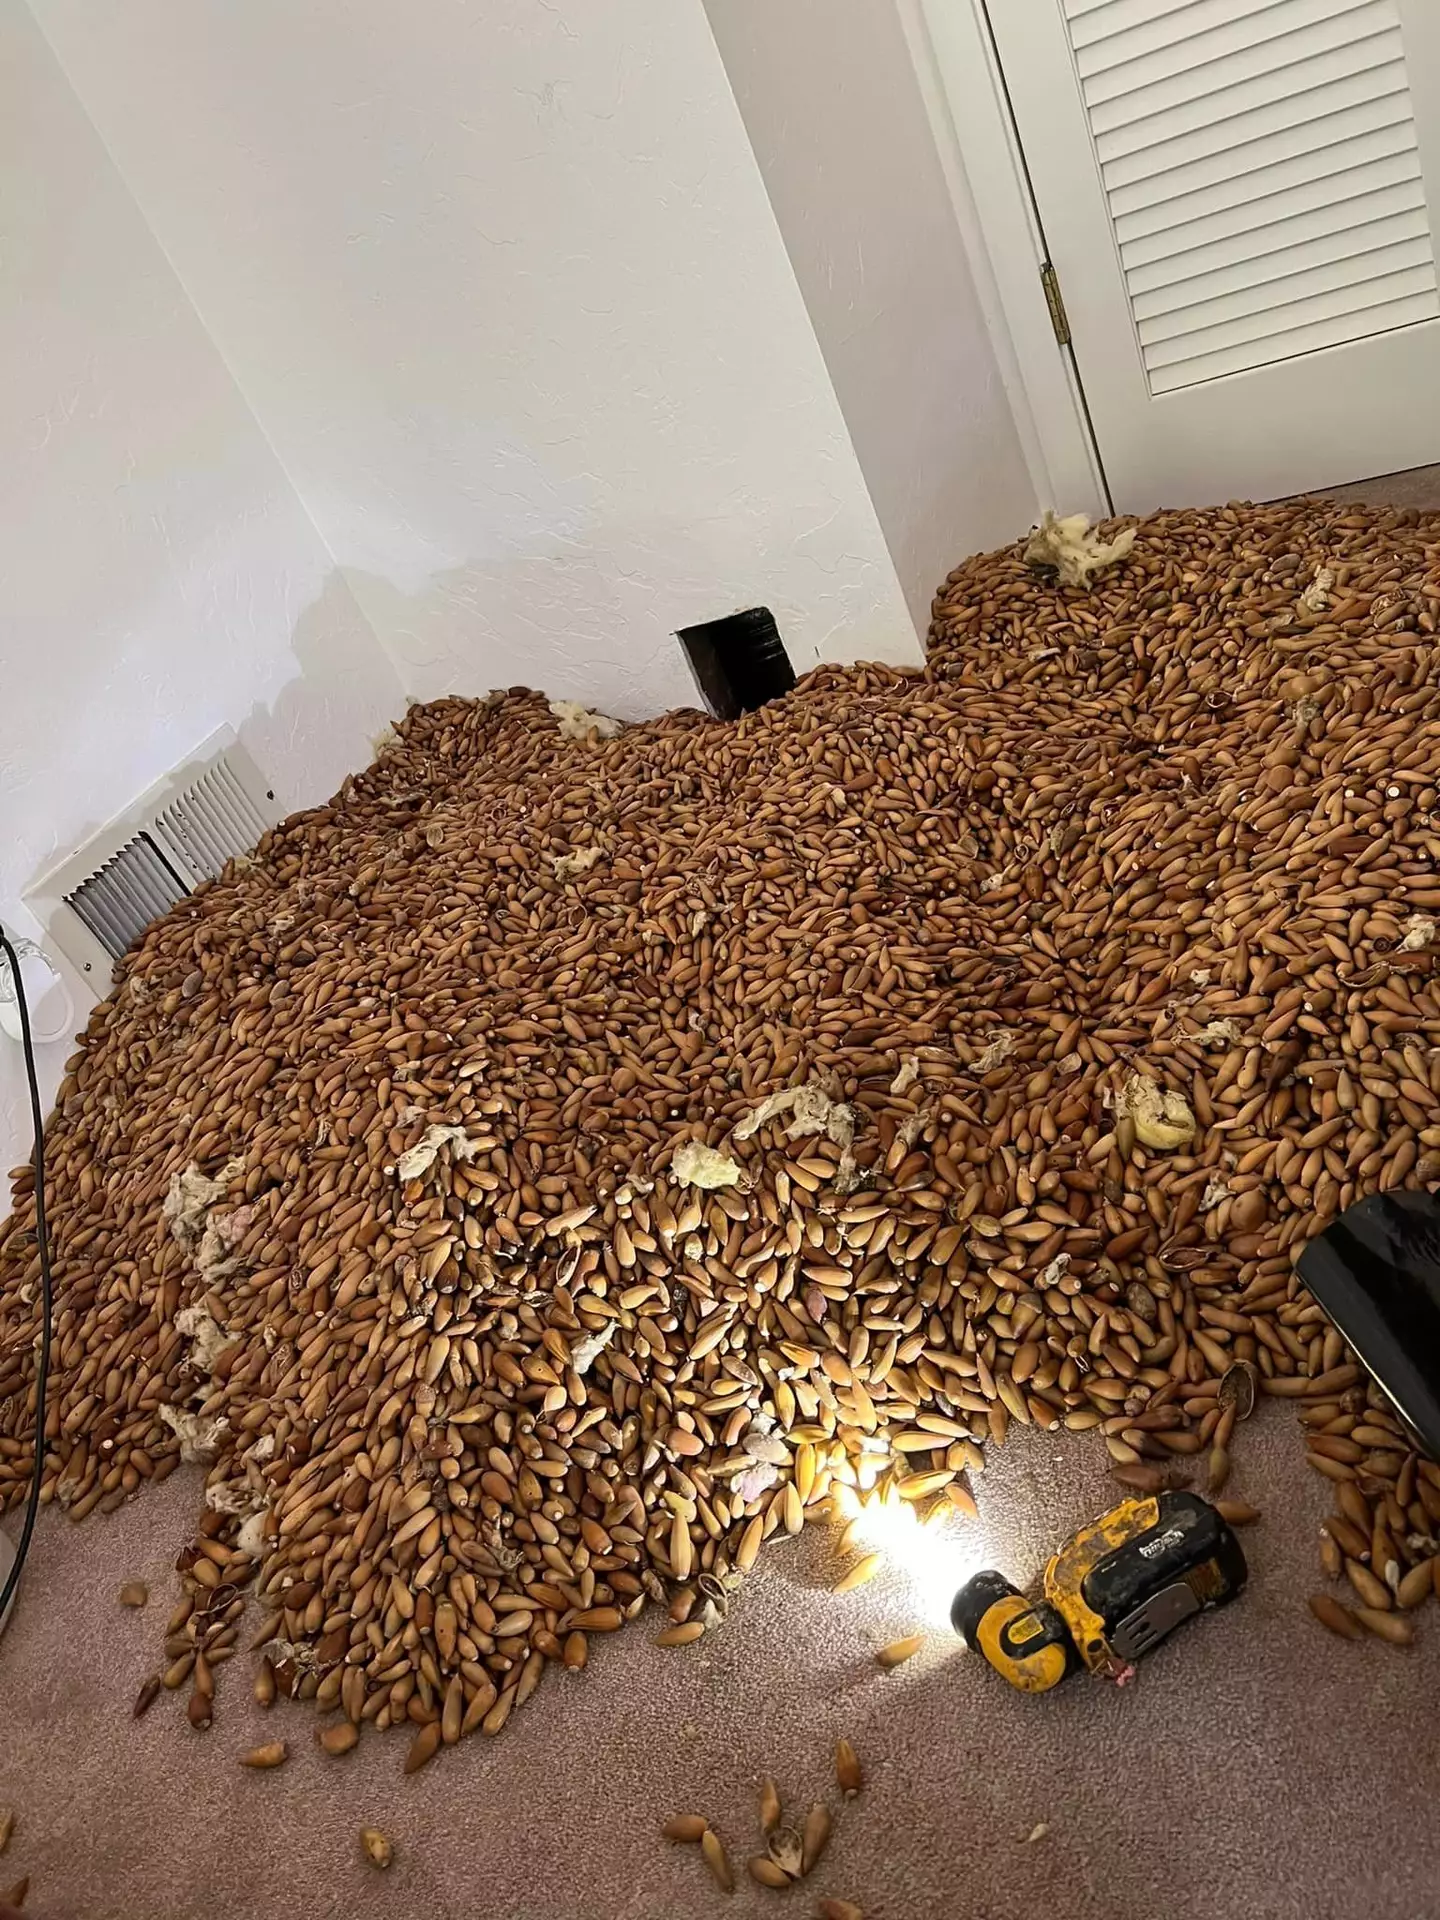 He found around 700 pounds worth of acorns.